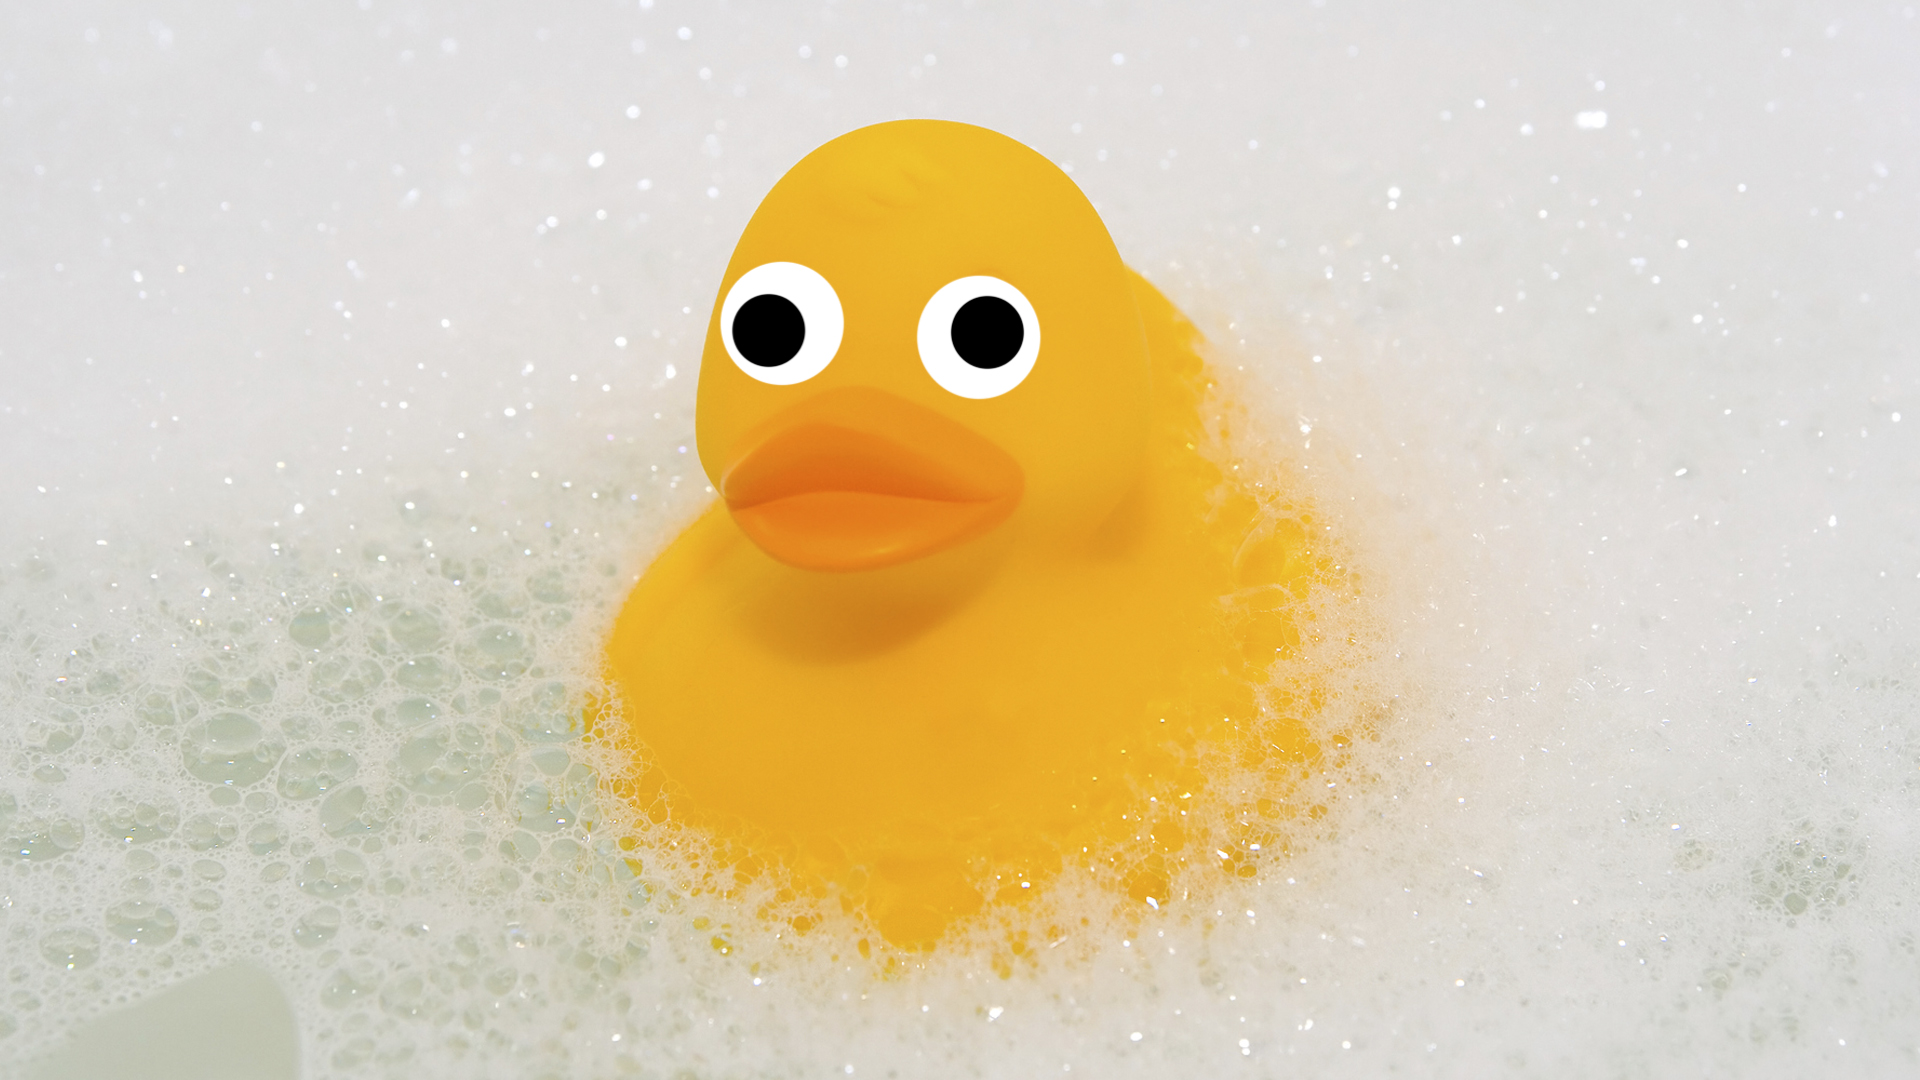 A rubber duck in a bubble bath